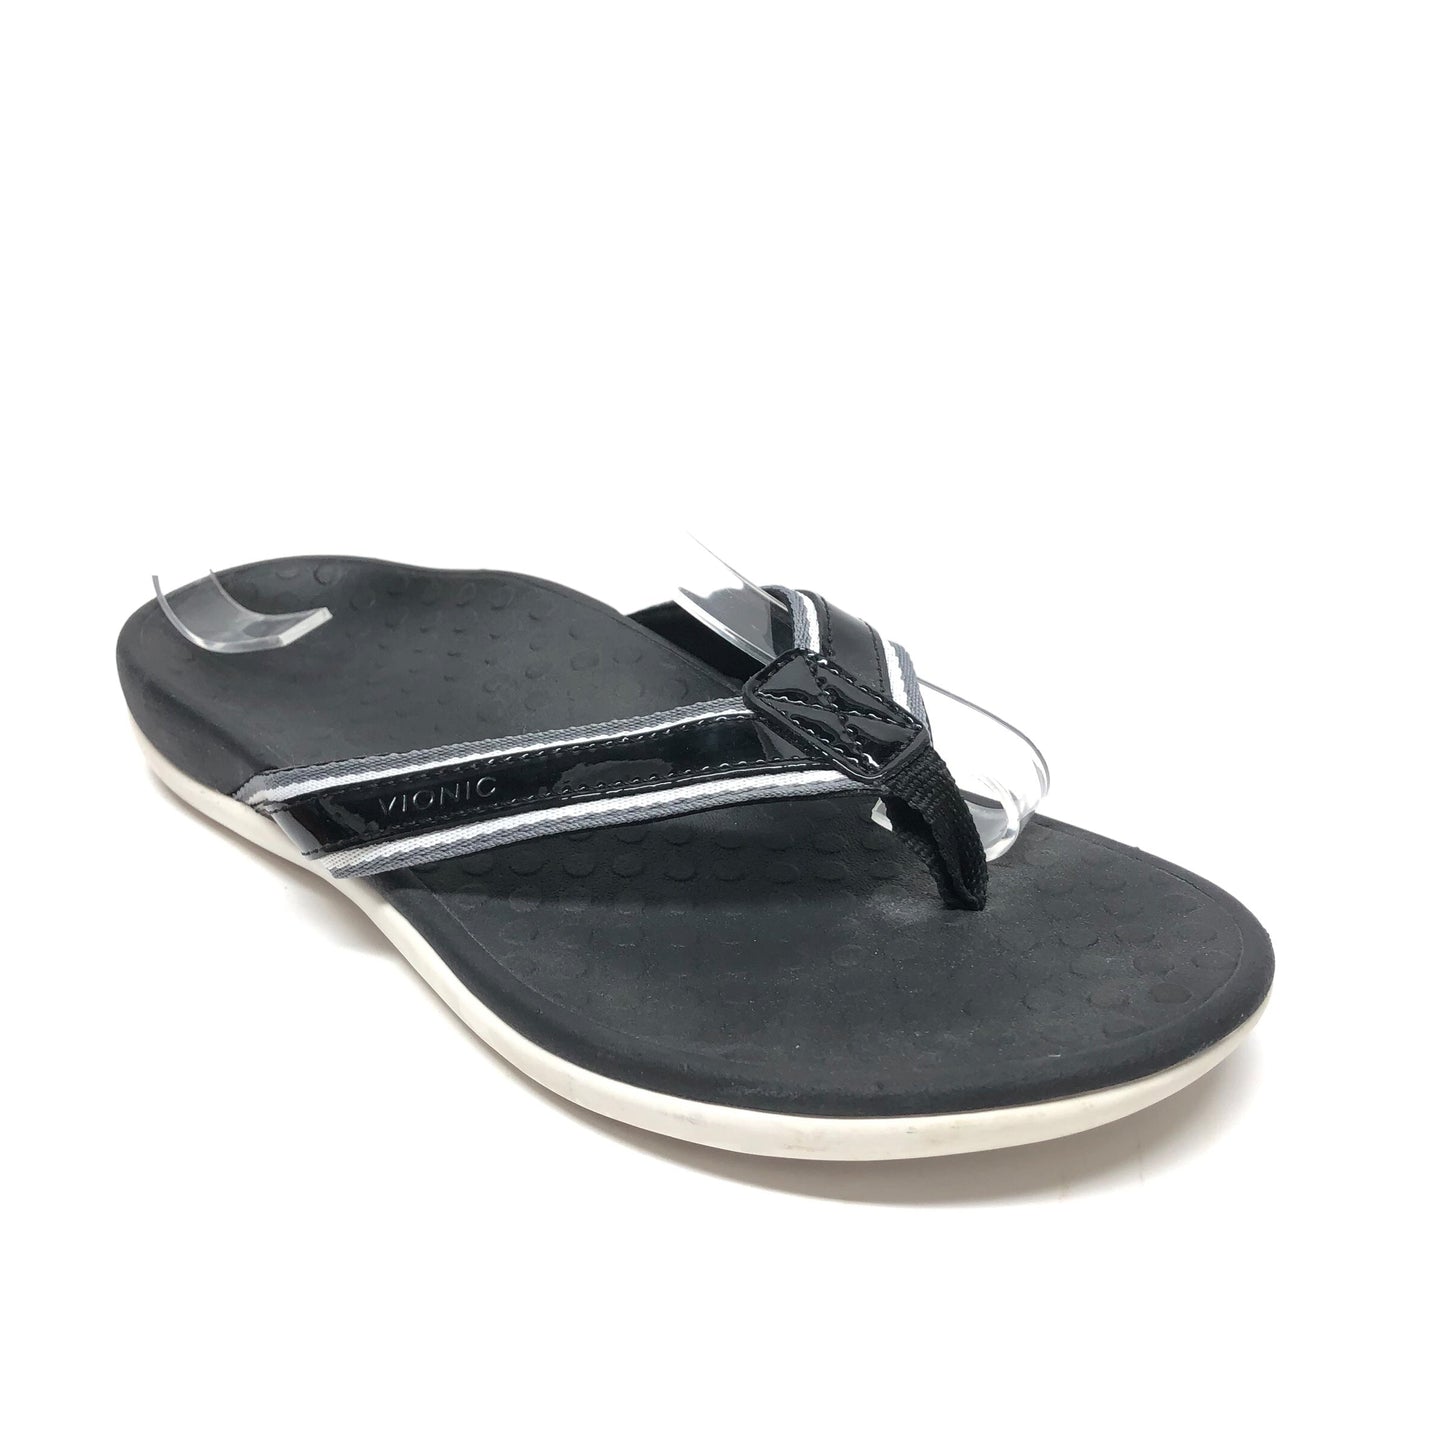 Black & White Sandals Flip Flops Vionic, Size 8